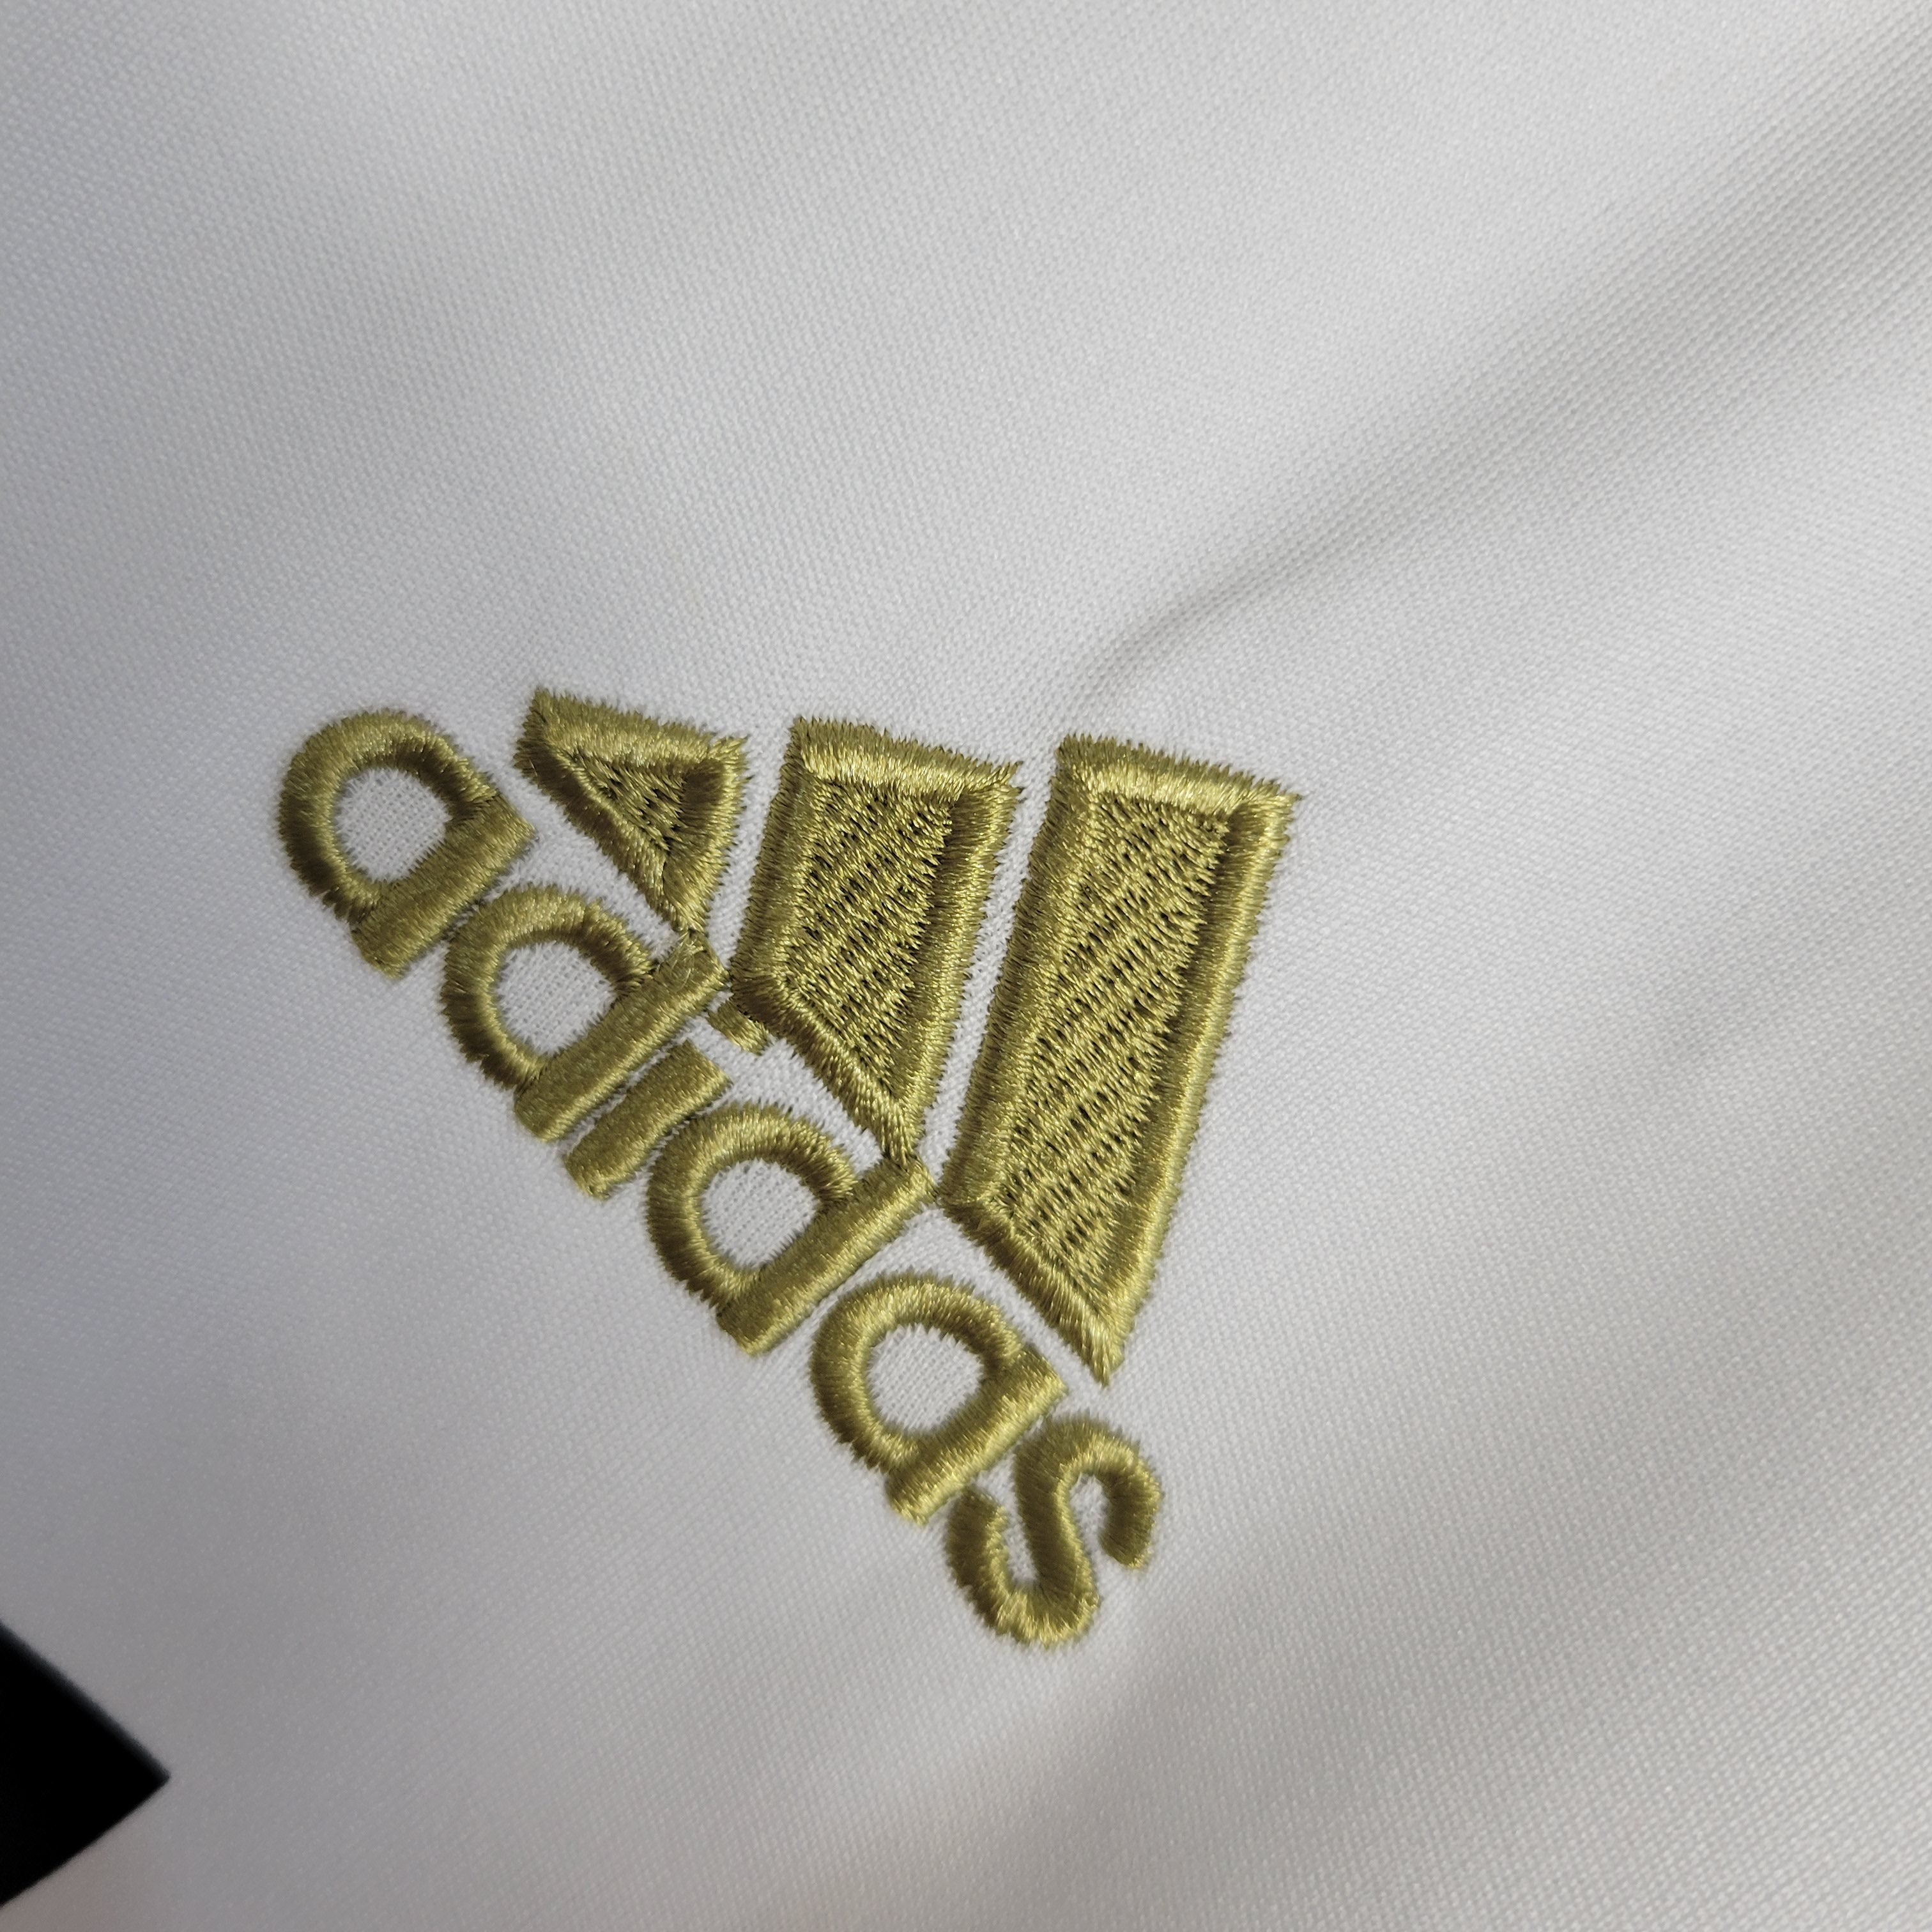 2013 2014 Real Madrid Away Short Sleeve Shirt - That Retro Shirt Store